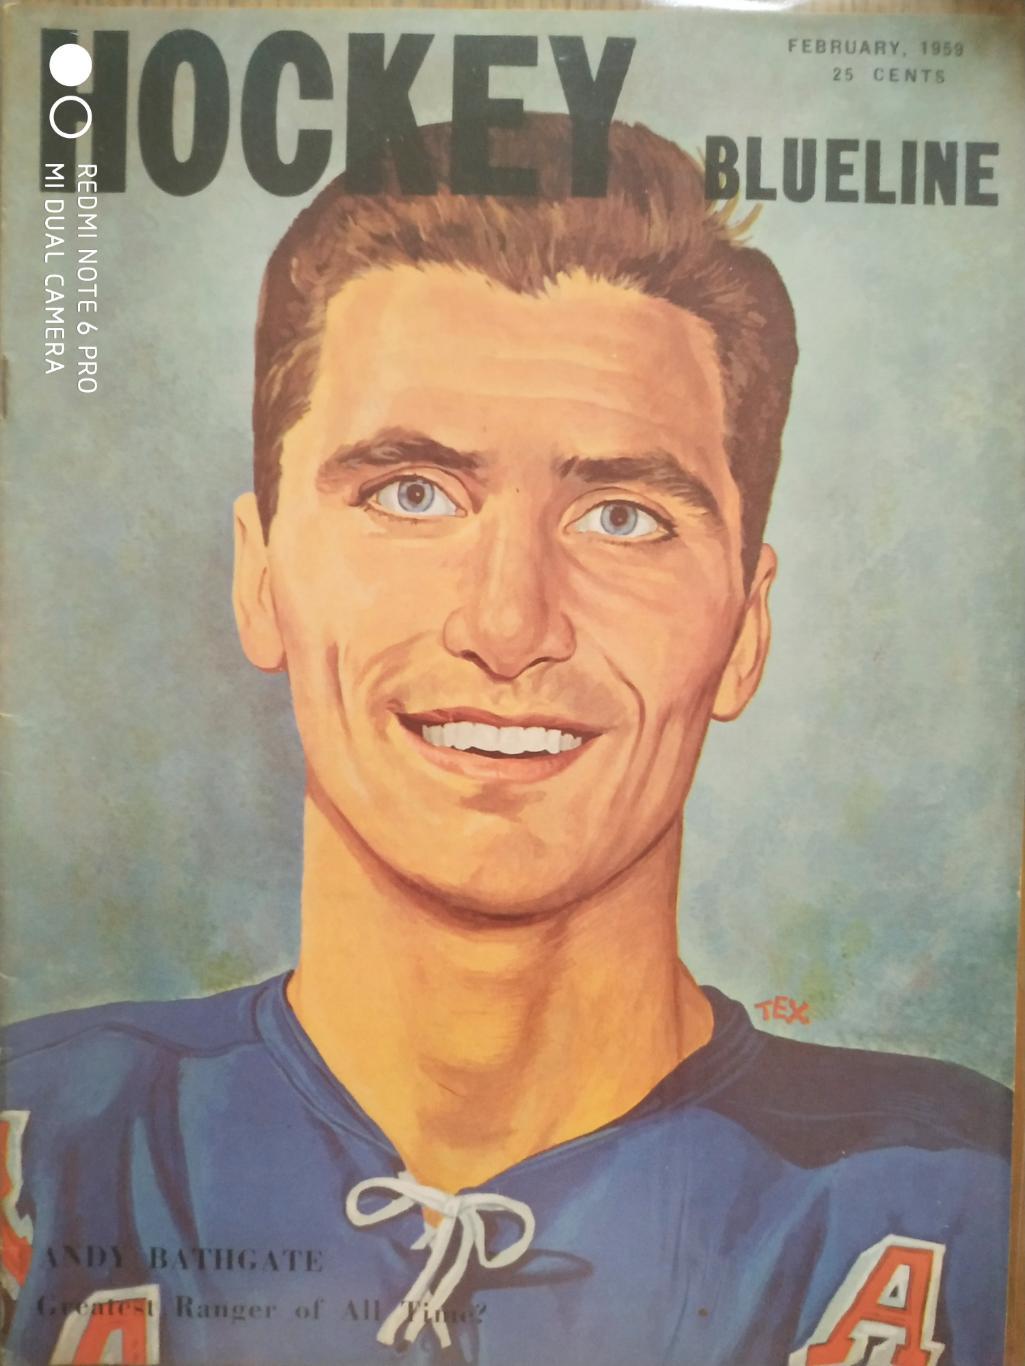 ЖУРНАЛ ЕЖЕМЕСЯЧНИК НХЛ NHL 1959 FEBRUARY THE HOCKEY MONTHLY BLUELINE